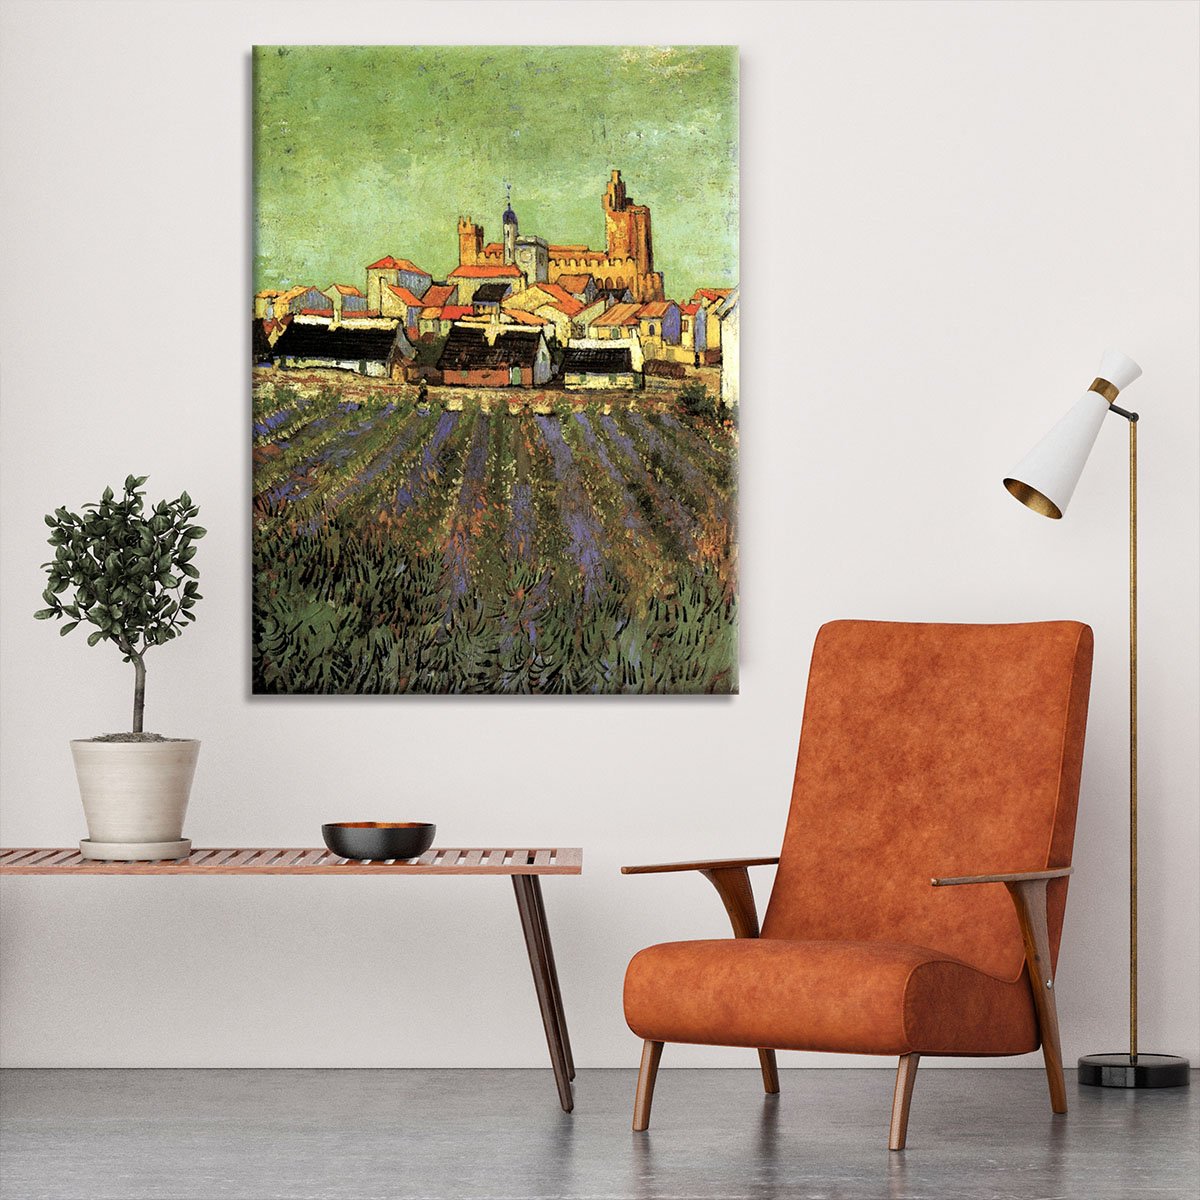 View of Saintes-Maries by Van Gogh Canvas Print or Poster